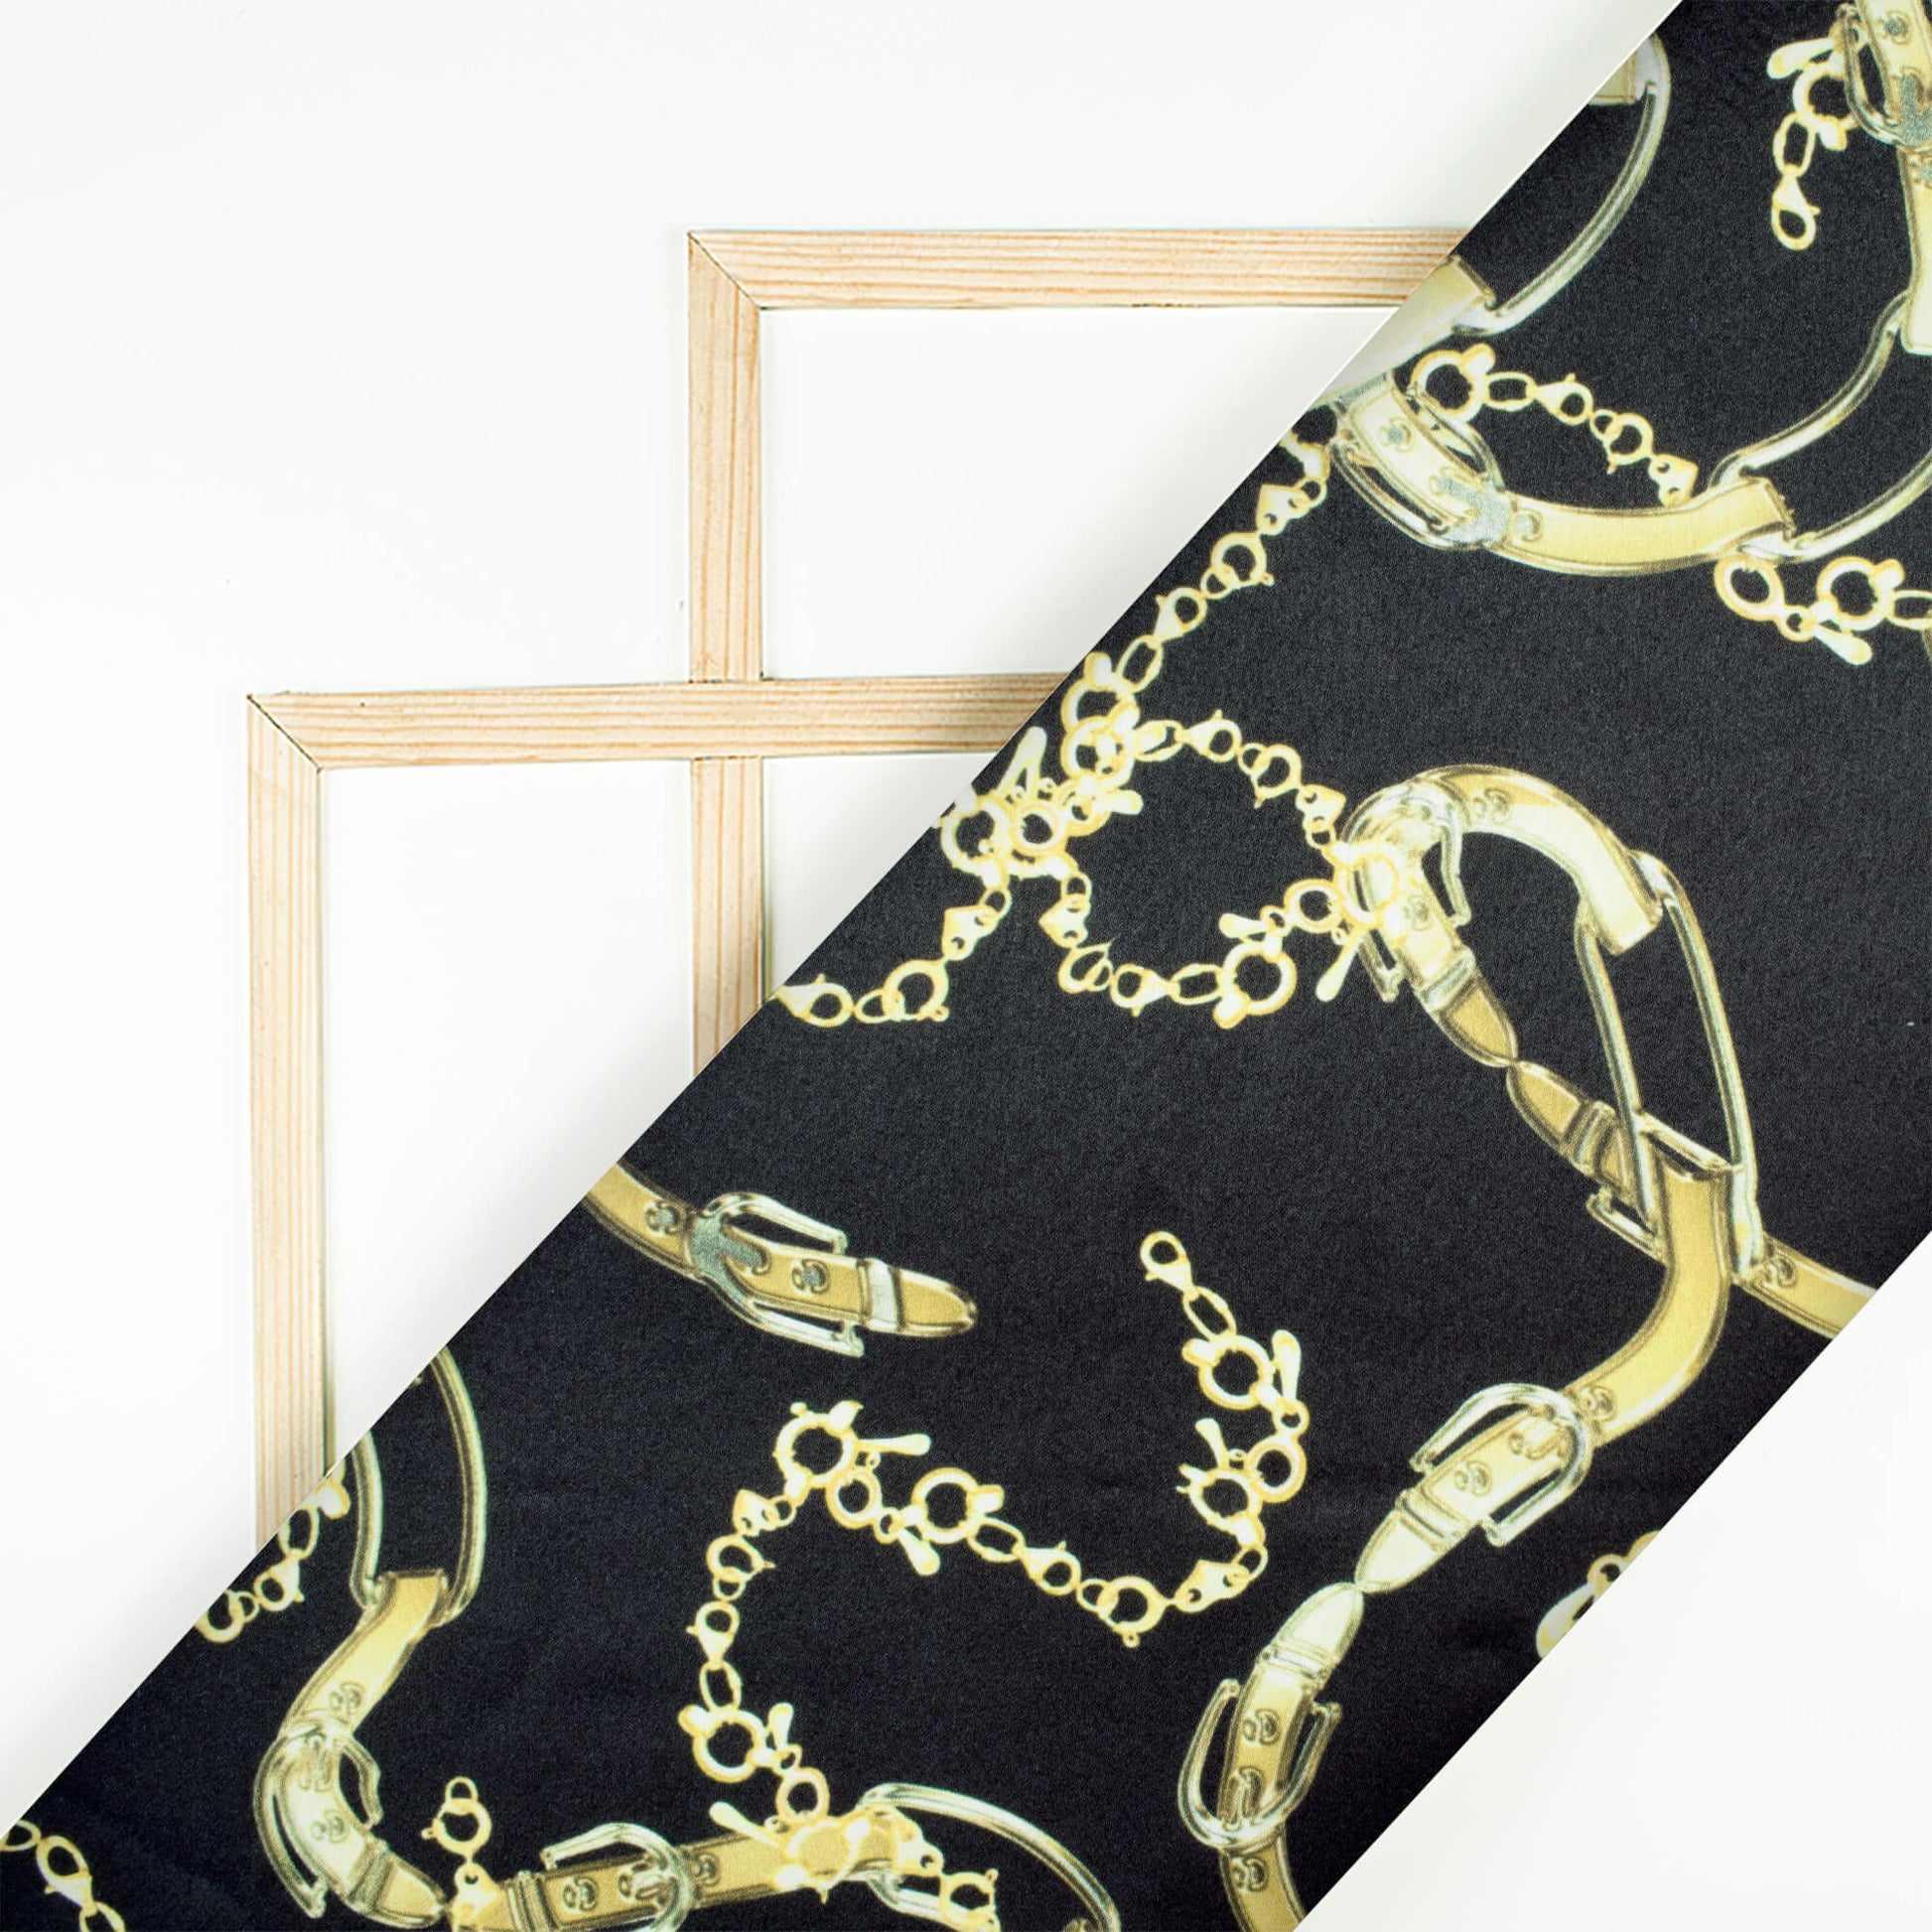 Black And Tiger Yellow Chain Pattern Digital Print Japan Satin